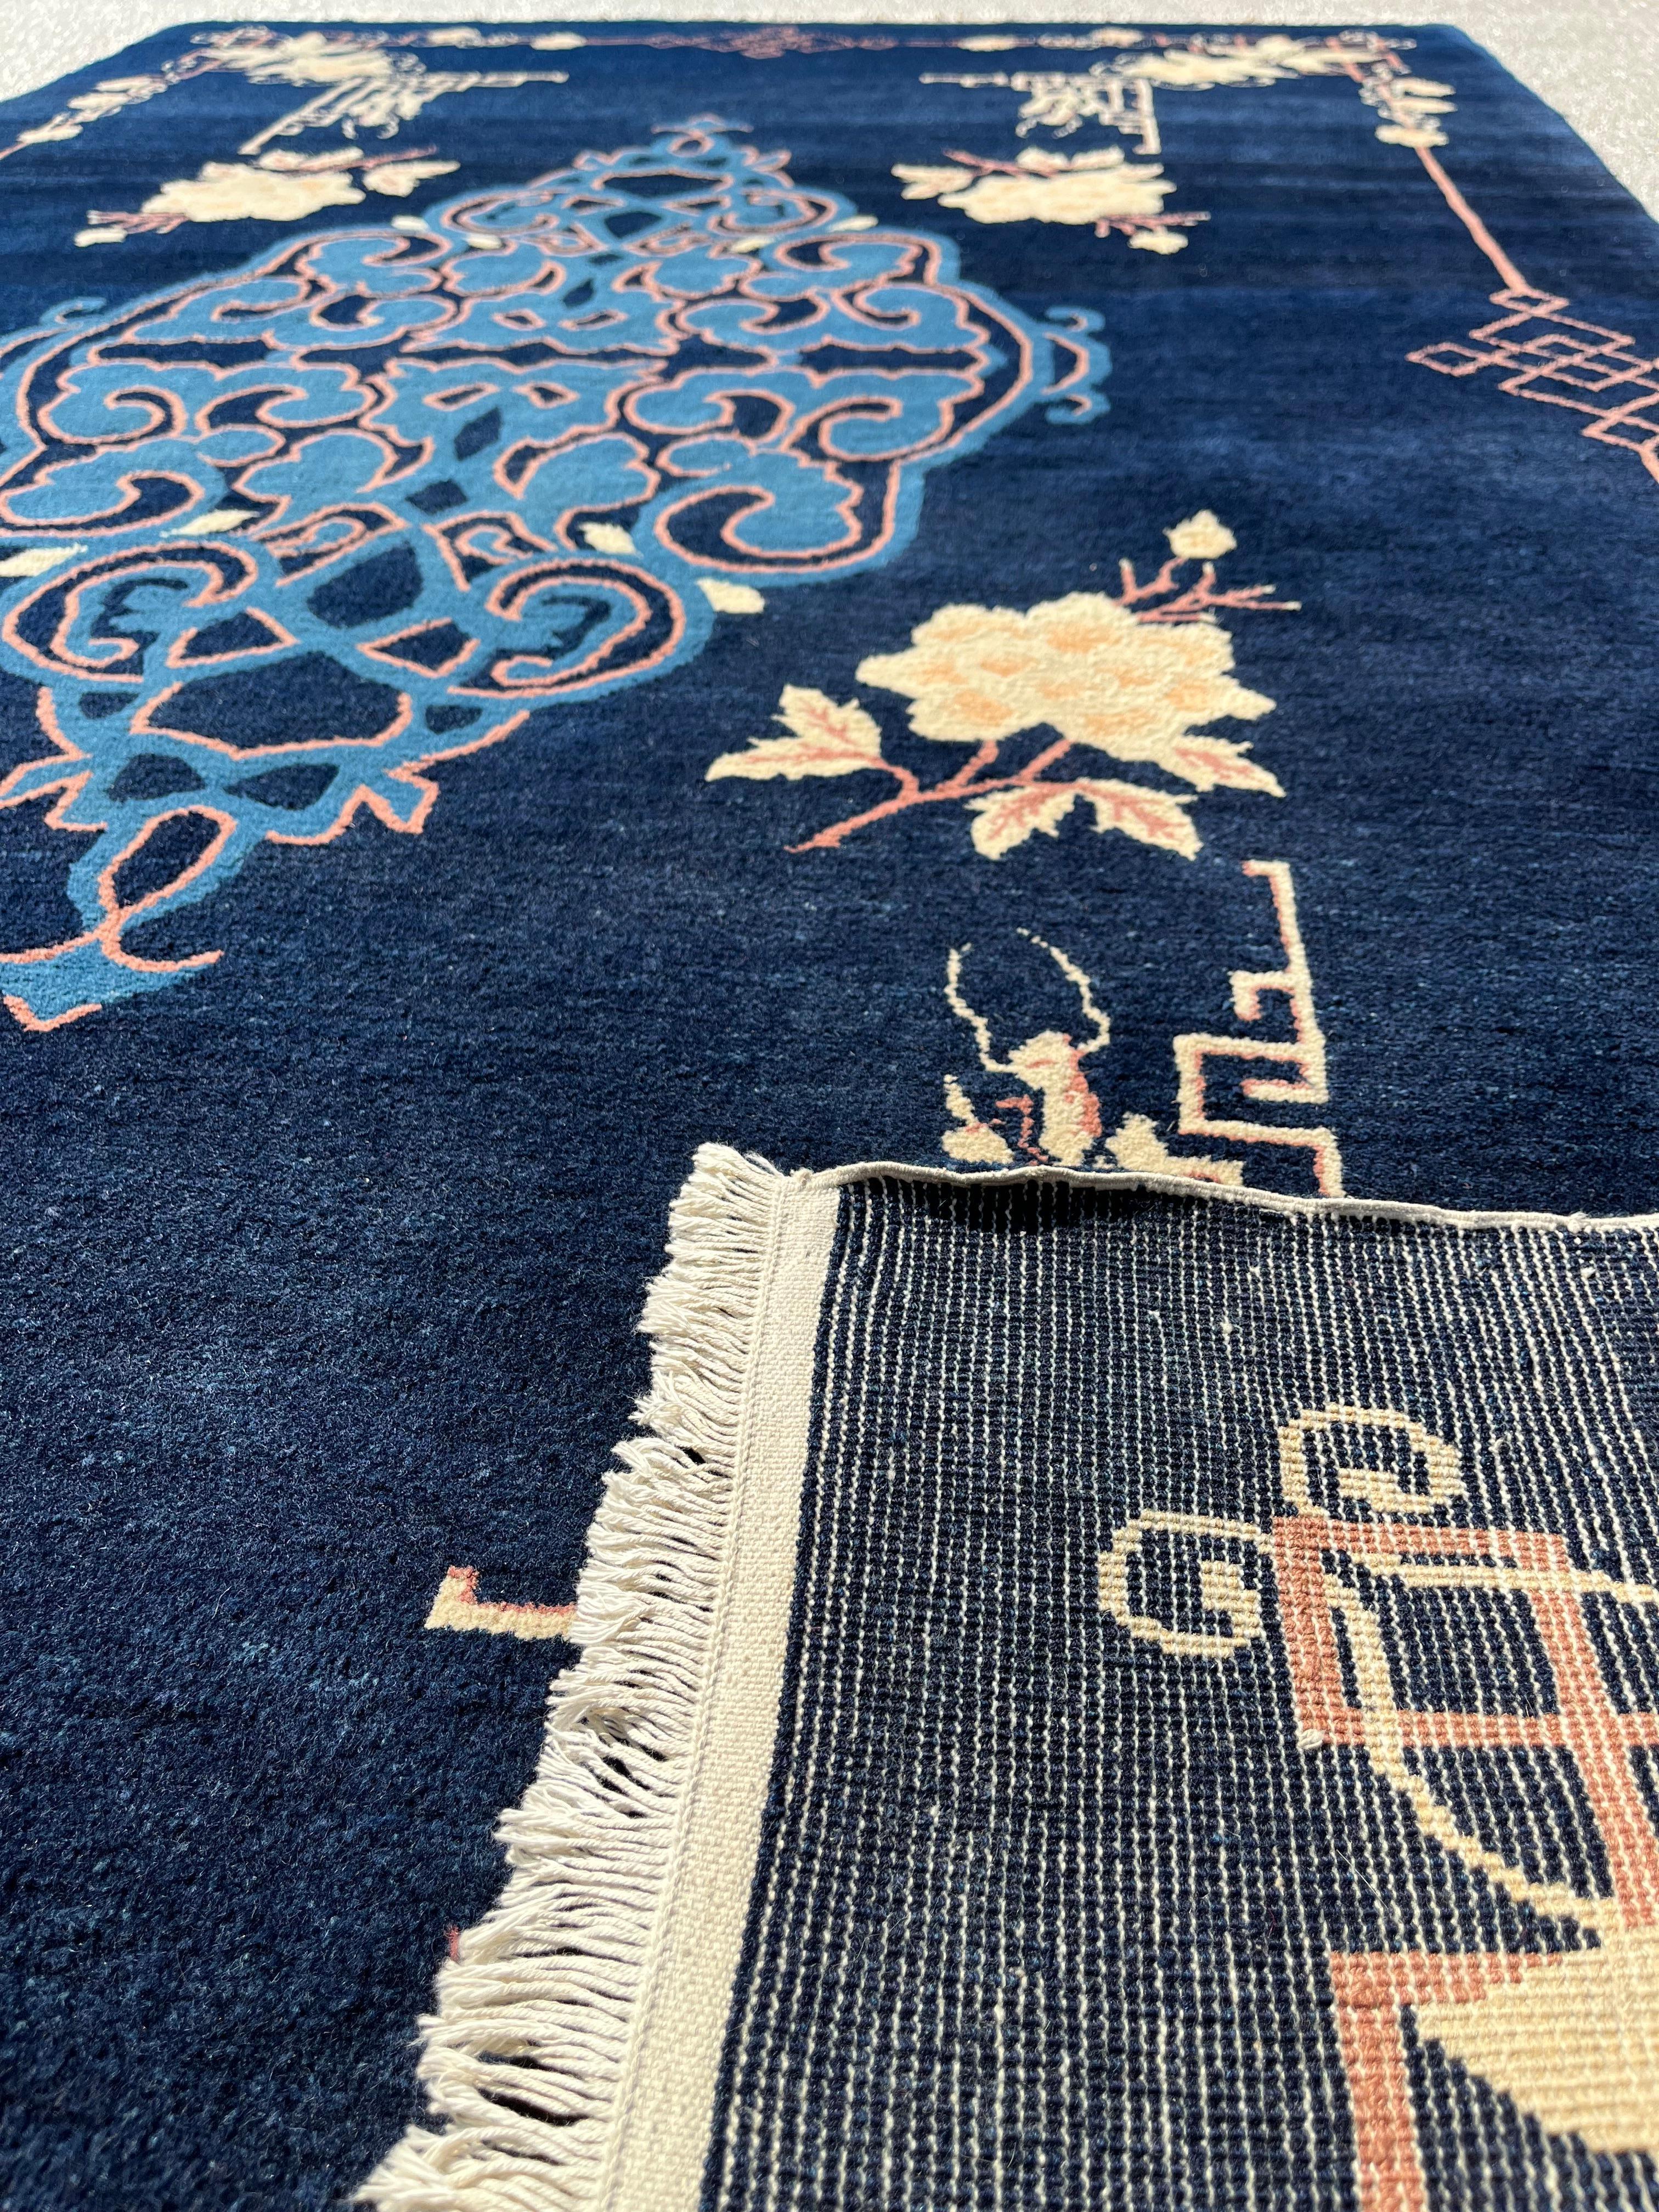 Chinese Carpet, Beijing, Royal Blue Beijing For Sale 2